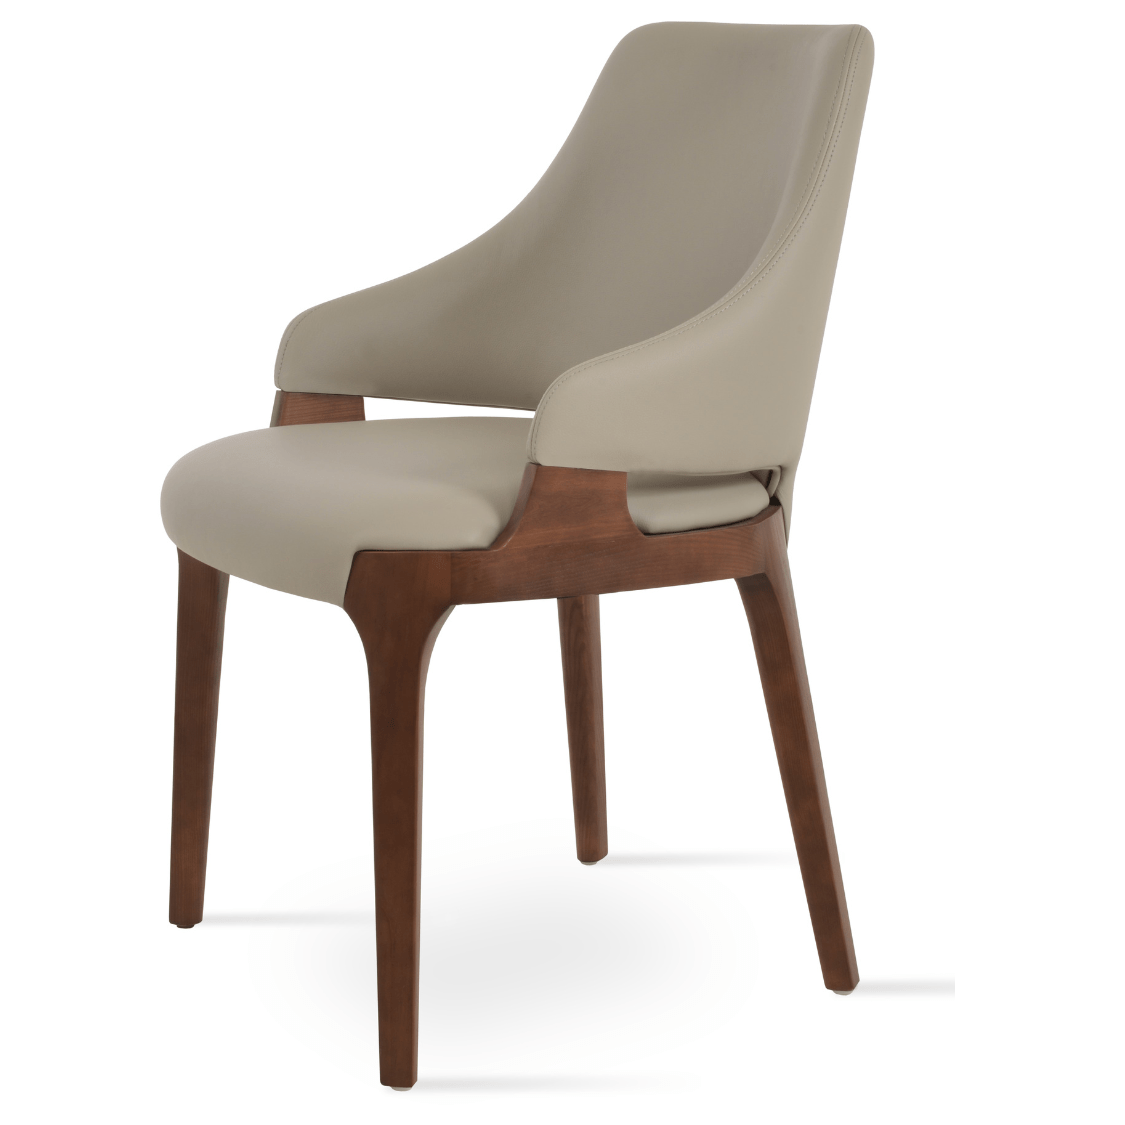 Plattner Cream Leather Dining Arm Chair - Your Bar Stools Canada